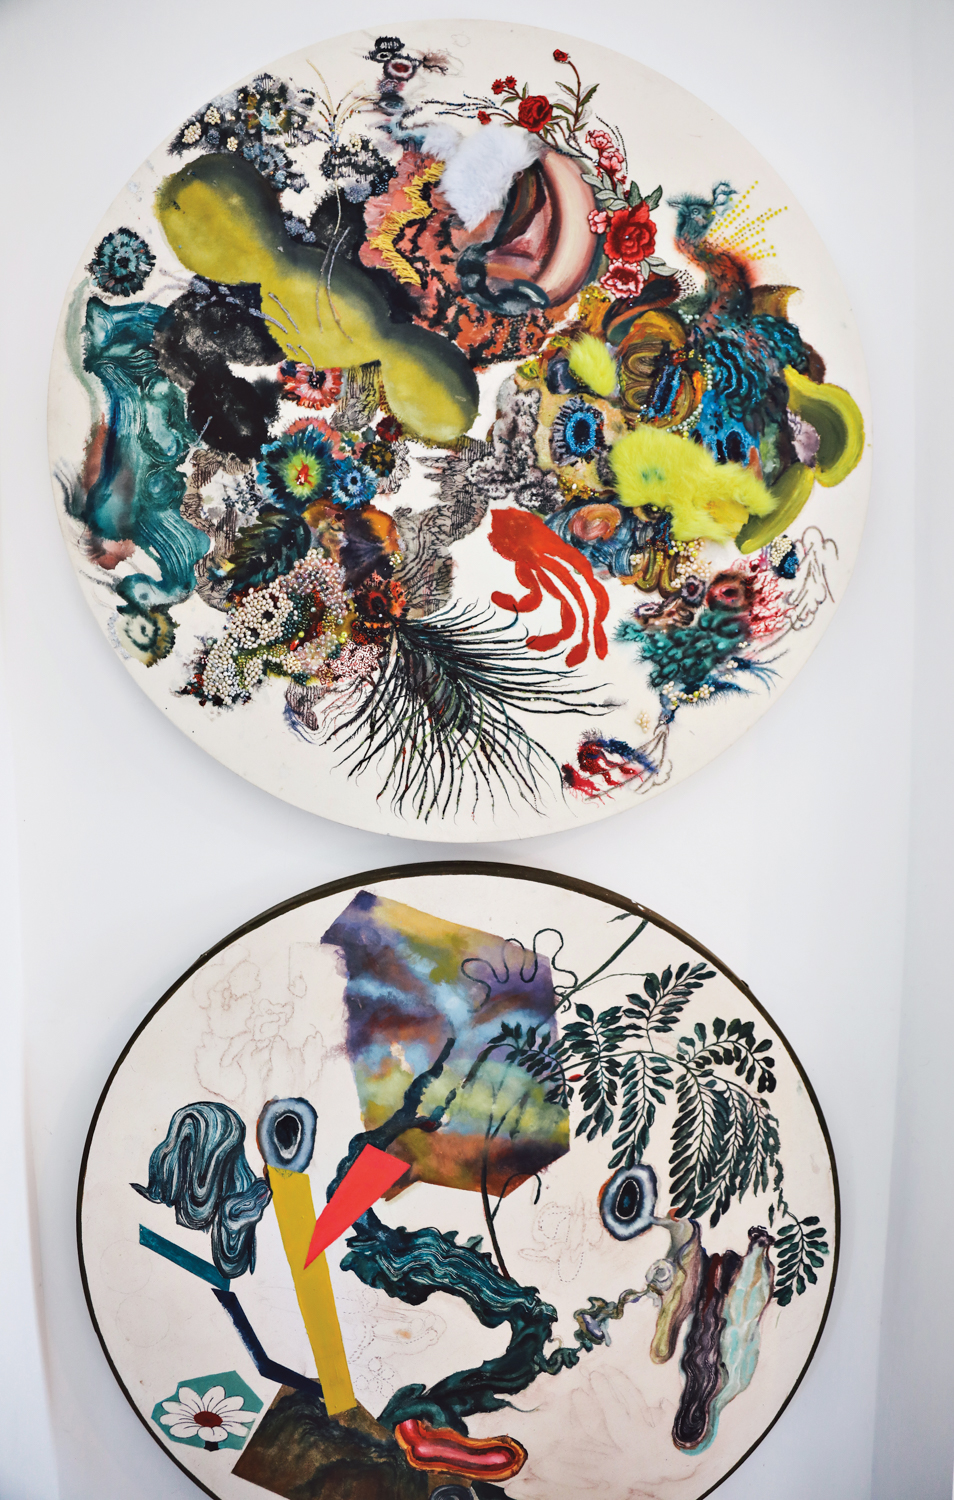 Two artworks by Ken Gun Min on ceramic plate.